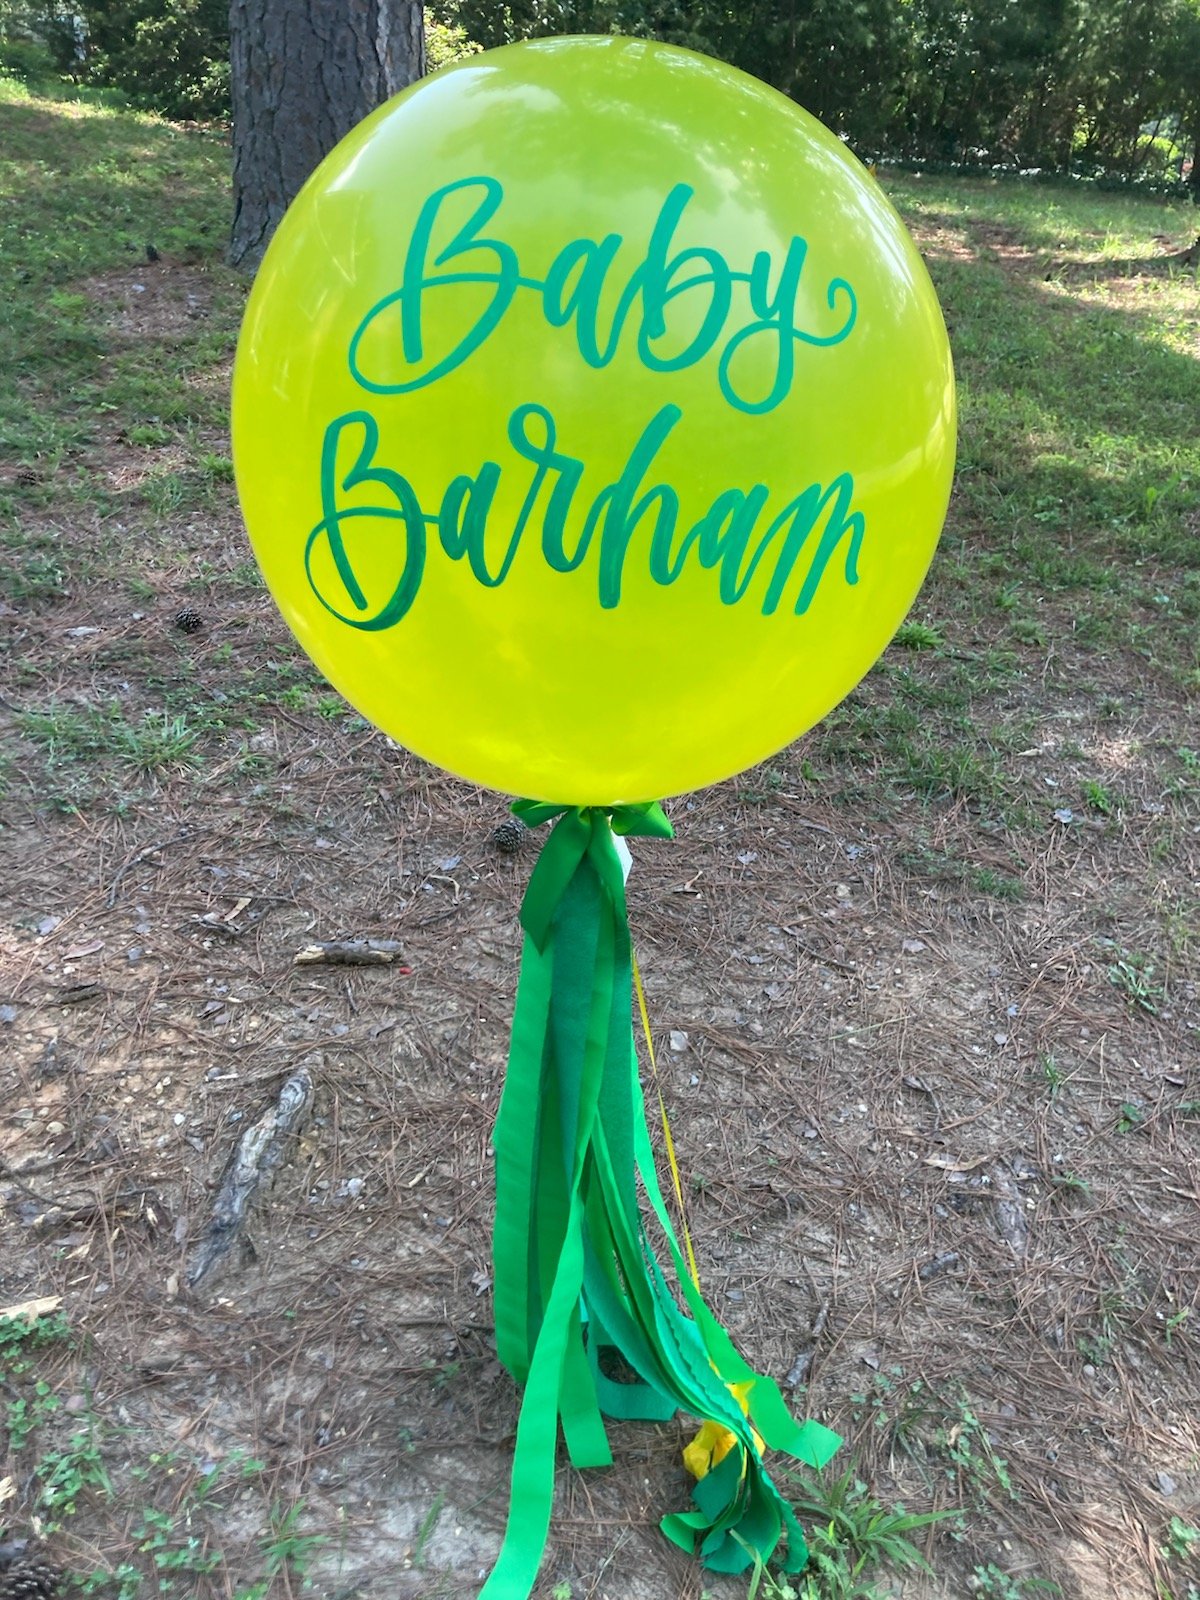 Balloon-Baby Barham.jpg